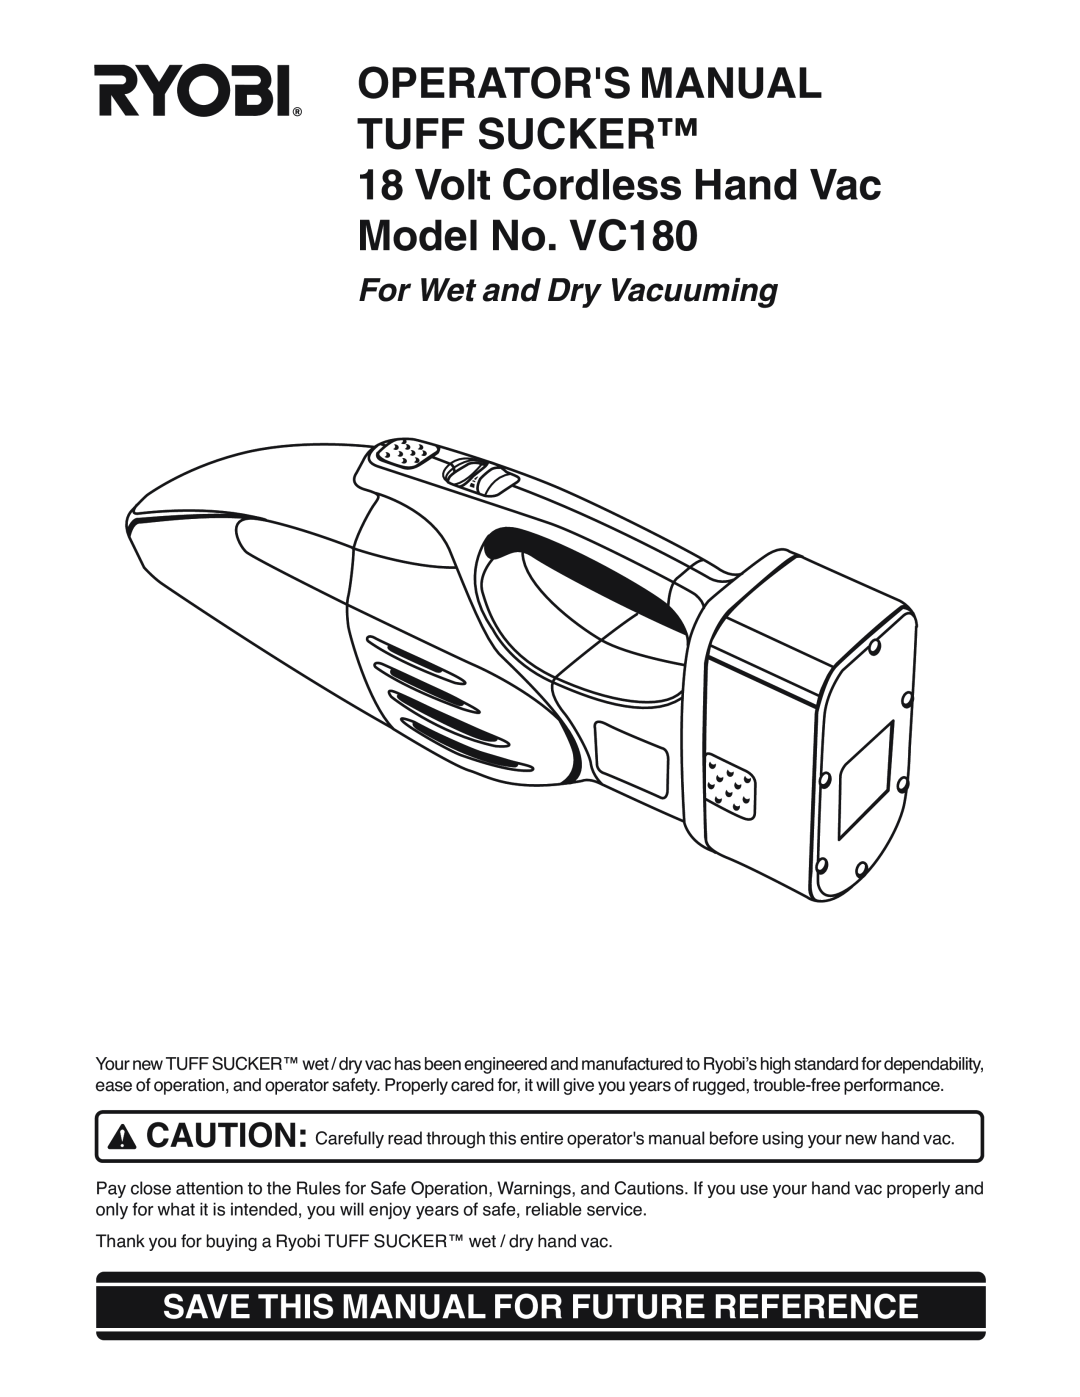 Ryobi manual Operators Manual Tuff Sucker, Volt Cordless Hand Vac Model No. VC180, For Wet and Dry Vacuuming 